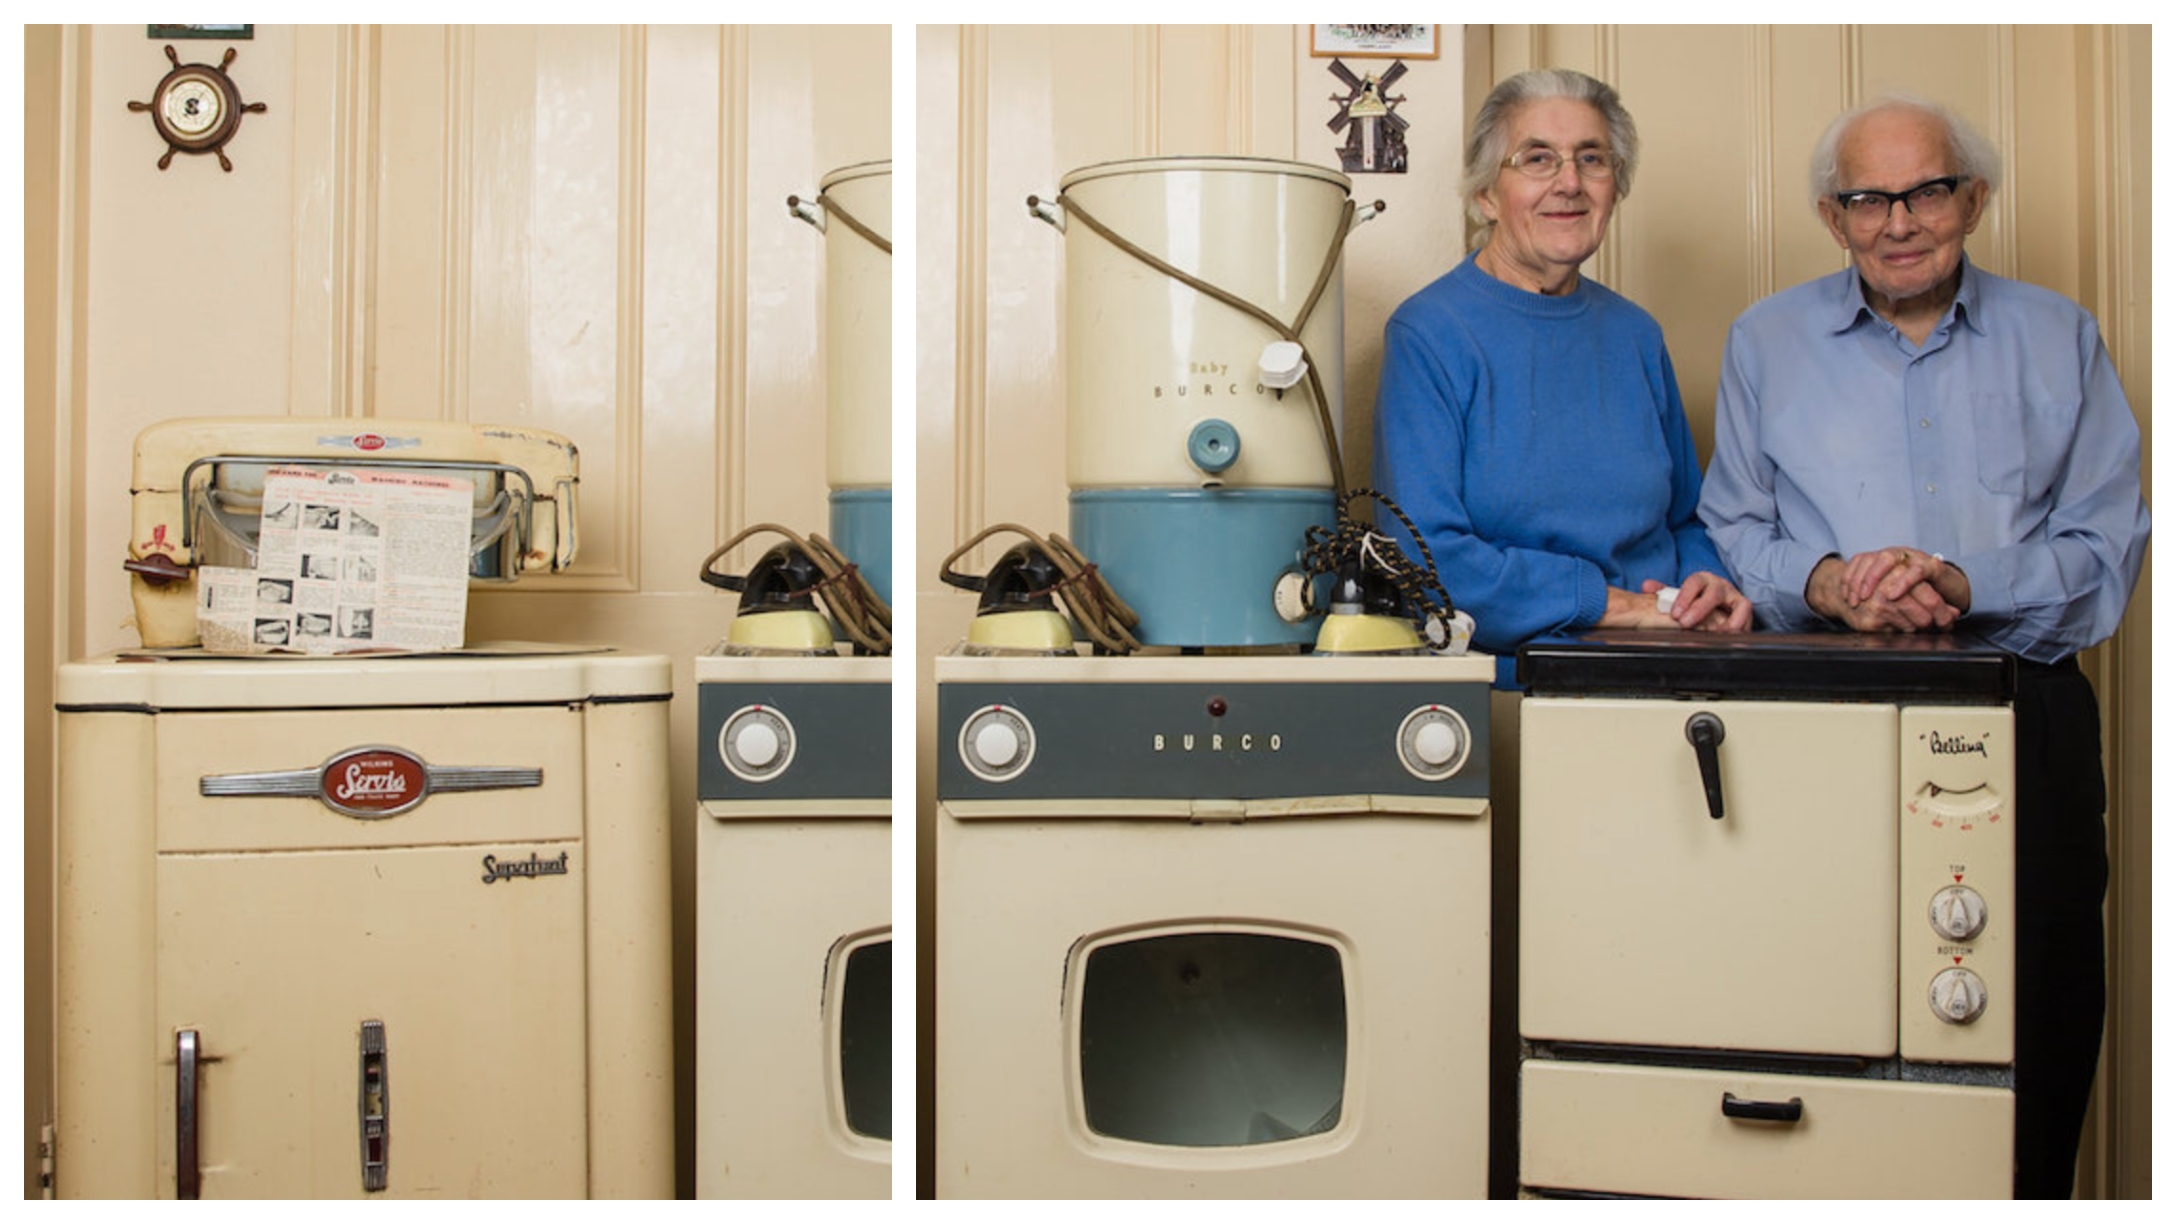 1950s kitchen appliances